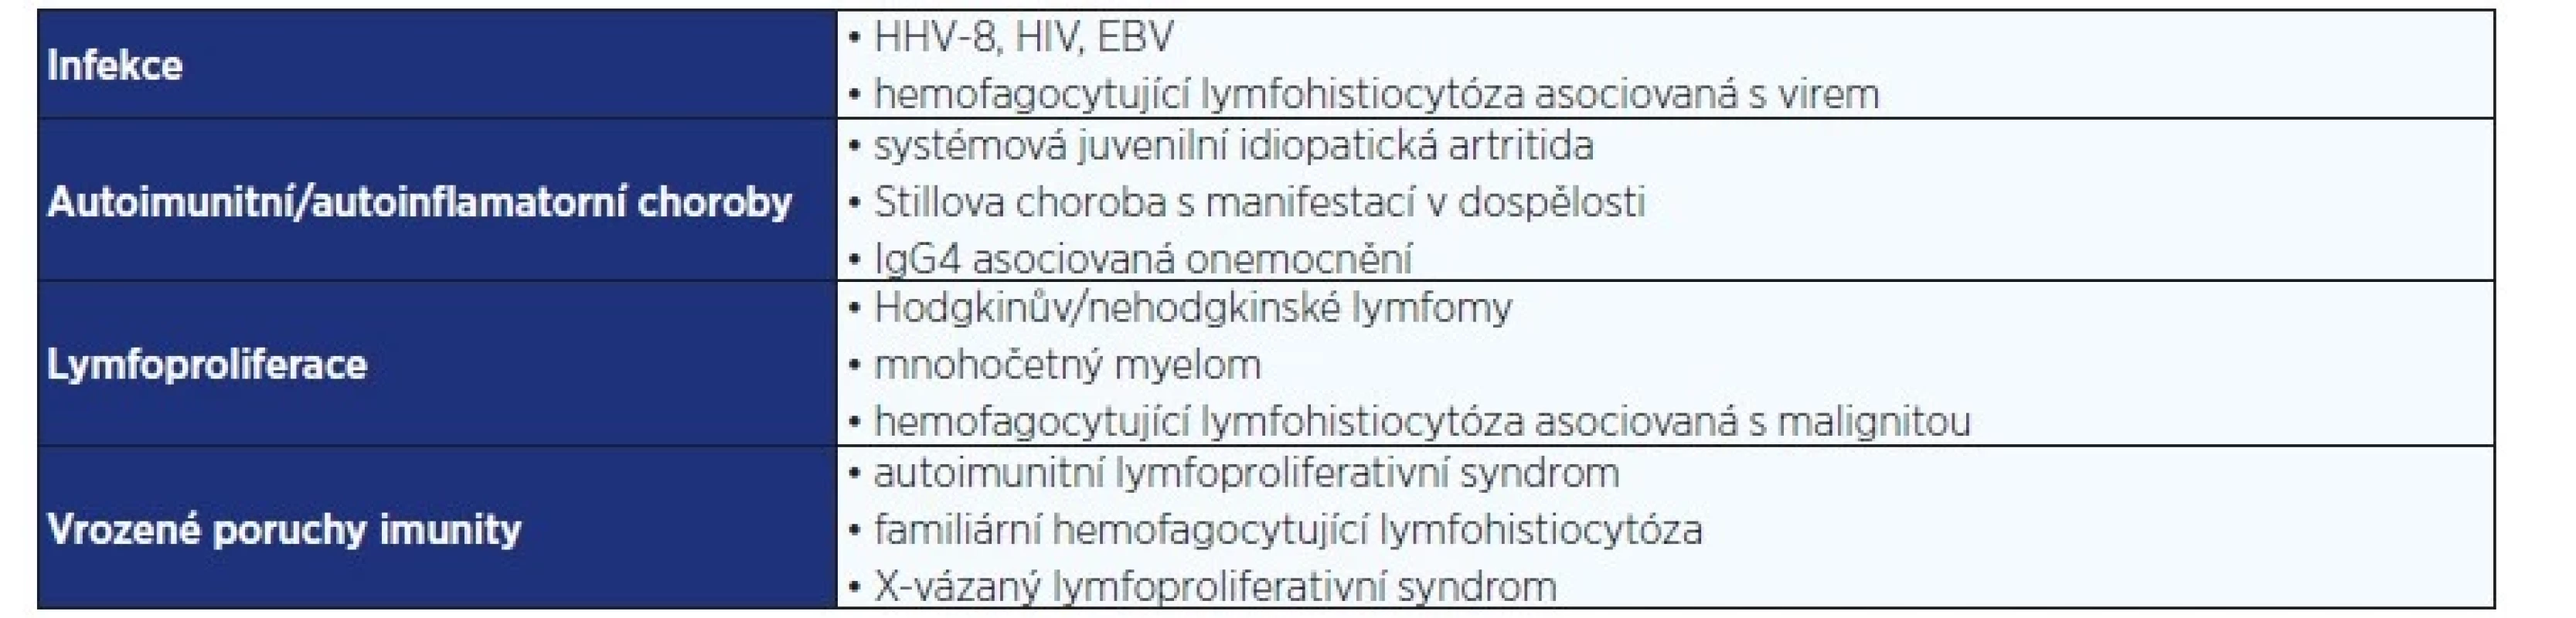 Diferenciální diagnostika multicentrické formy Castlemanovy choroby (HHV-8, HIV, EBV) (7)